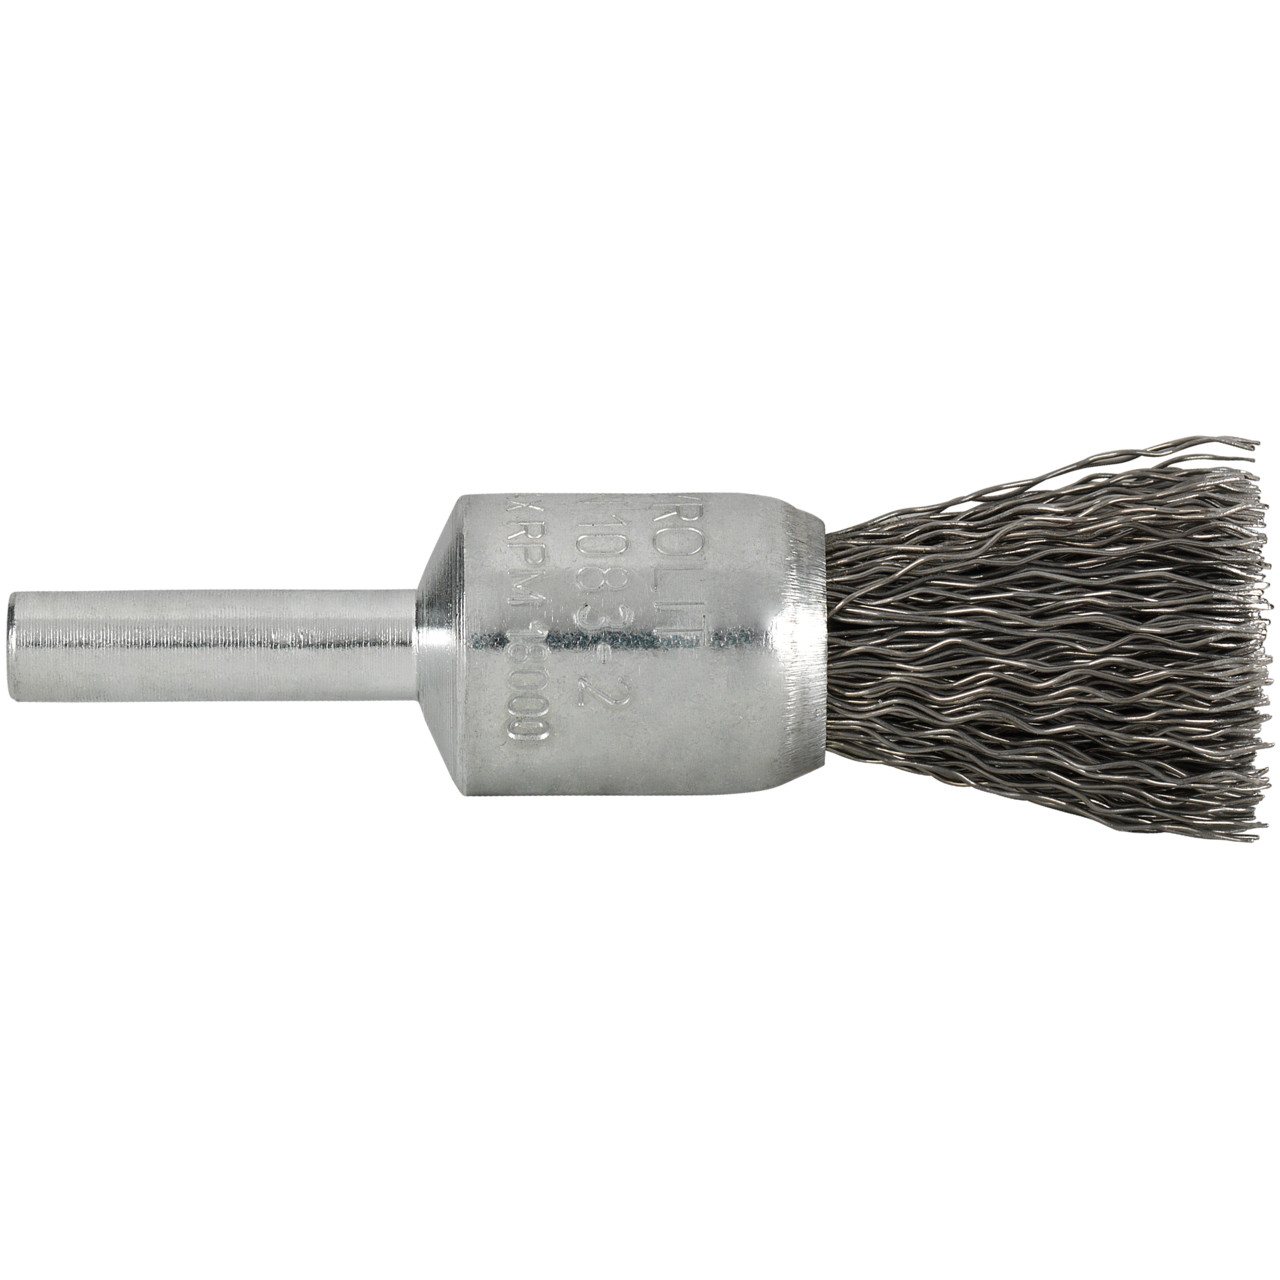 Tyrolit Brush brushes DxH-GExI 17x22-6x65 For steel, shape: 52PDW - (brush brushes), Art. 34043179